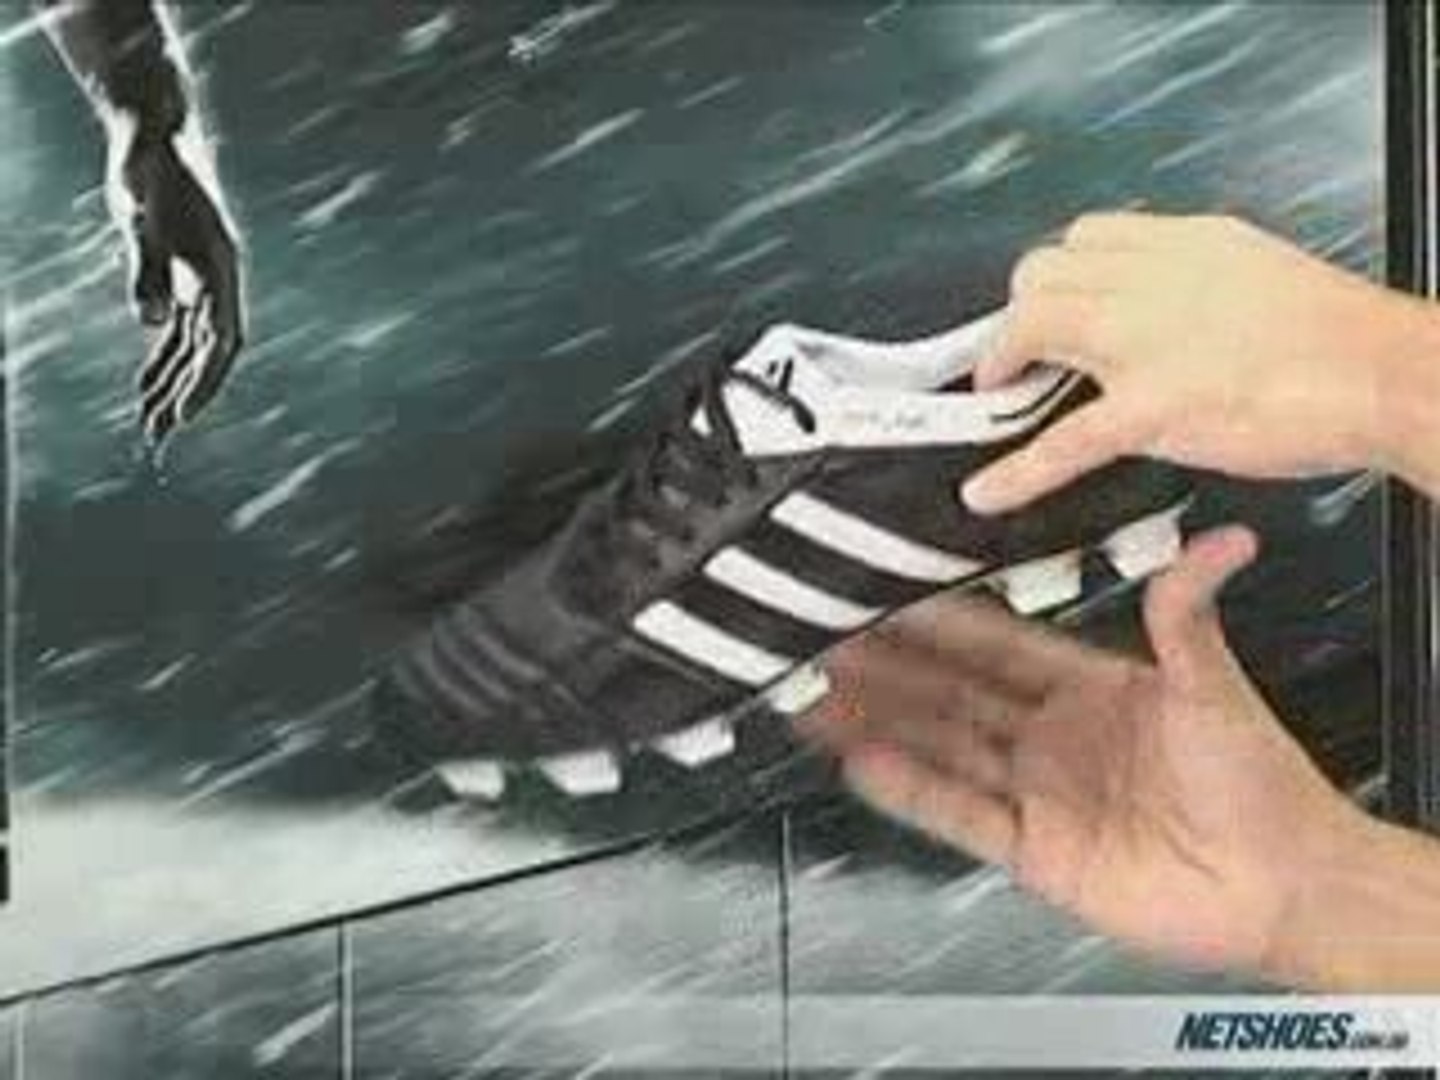 Netshoes - Chuteira Adidas adiPURE TRX FG - Vídeo Dailymotion